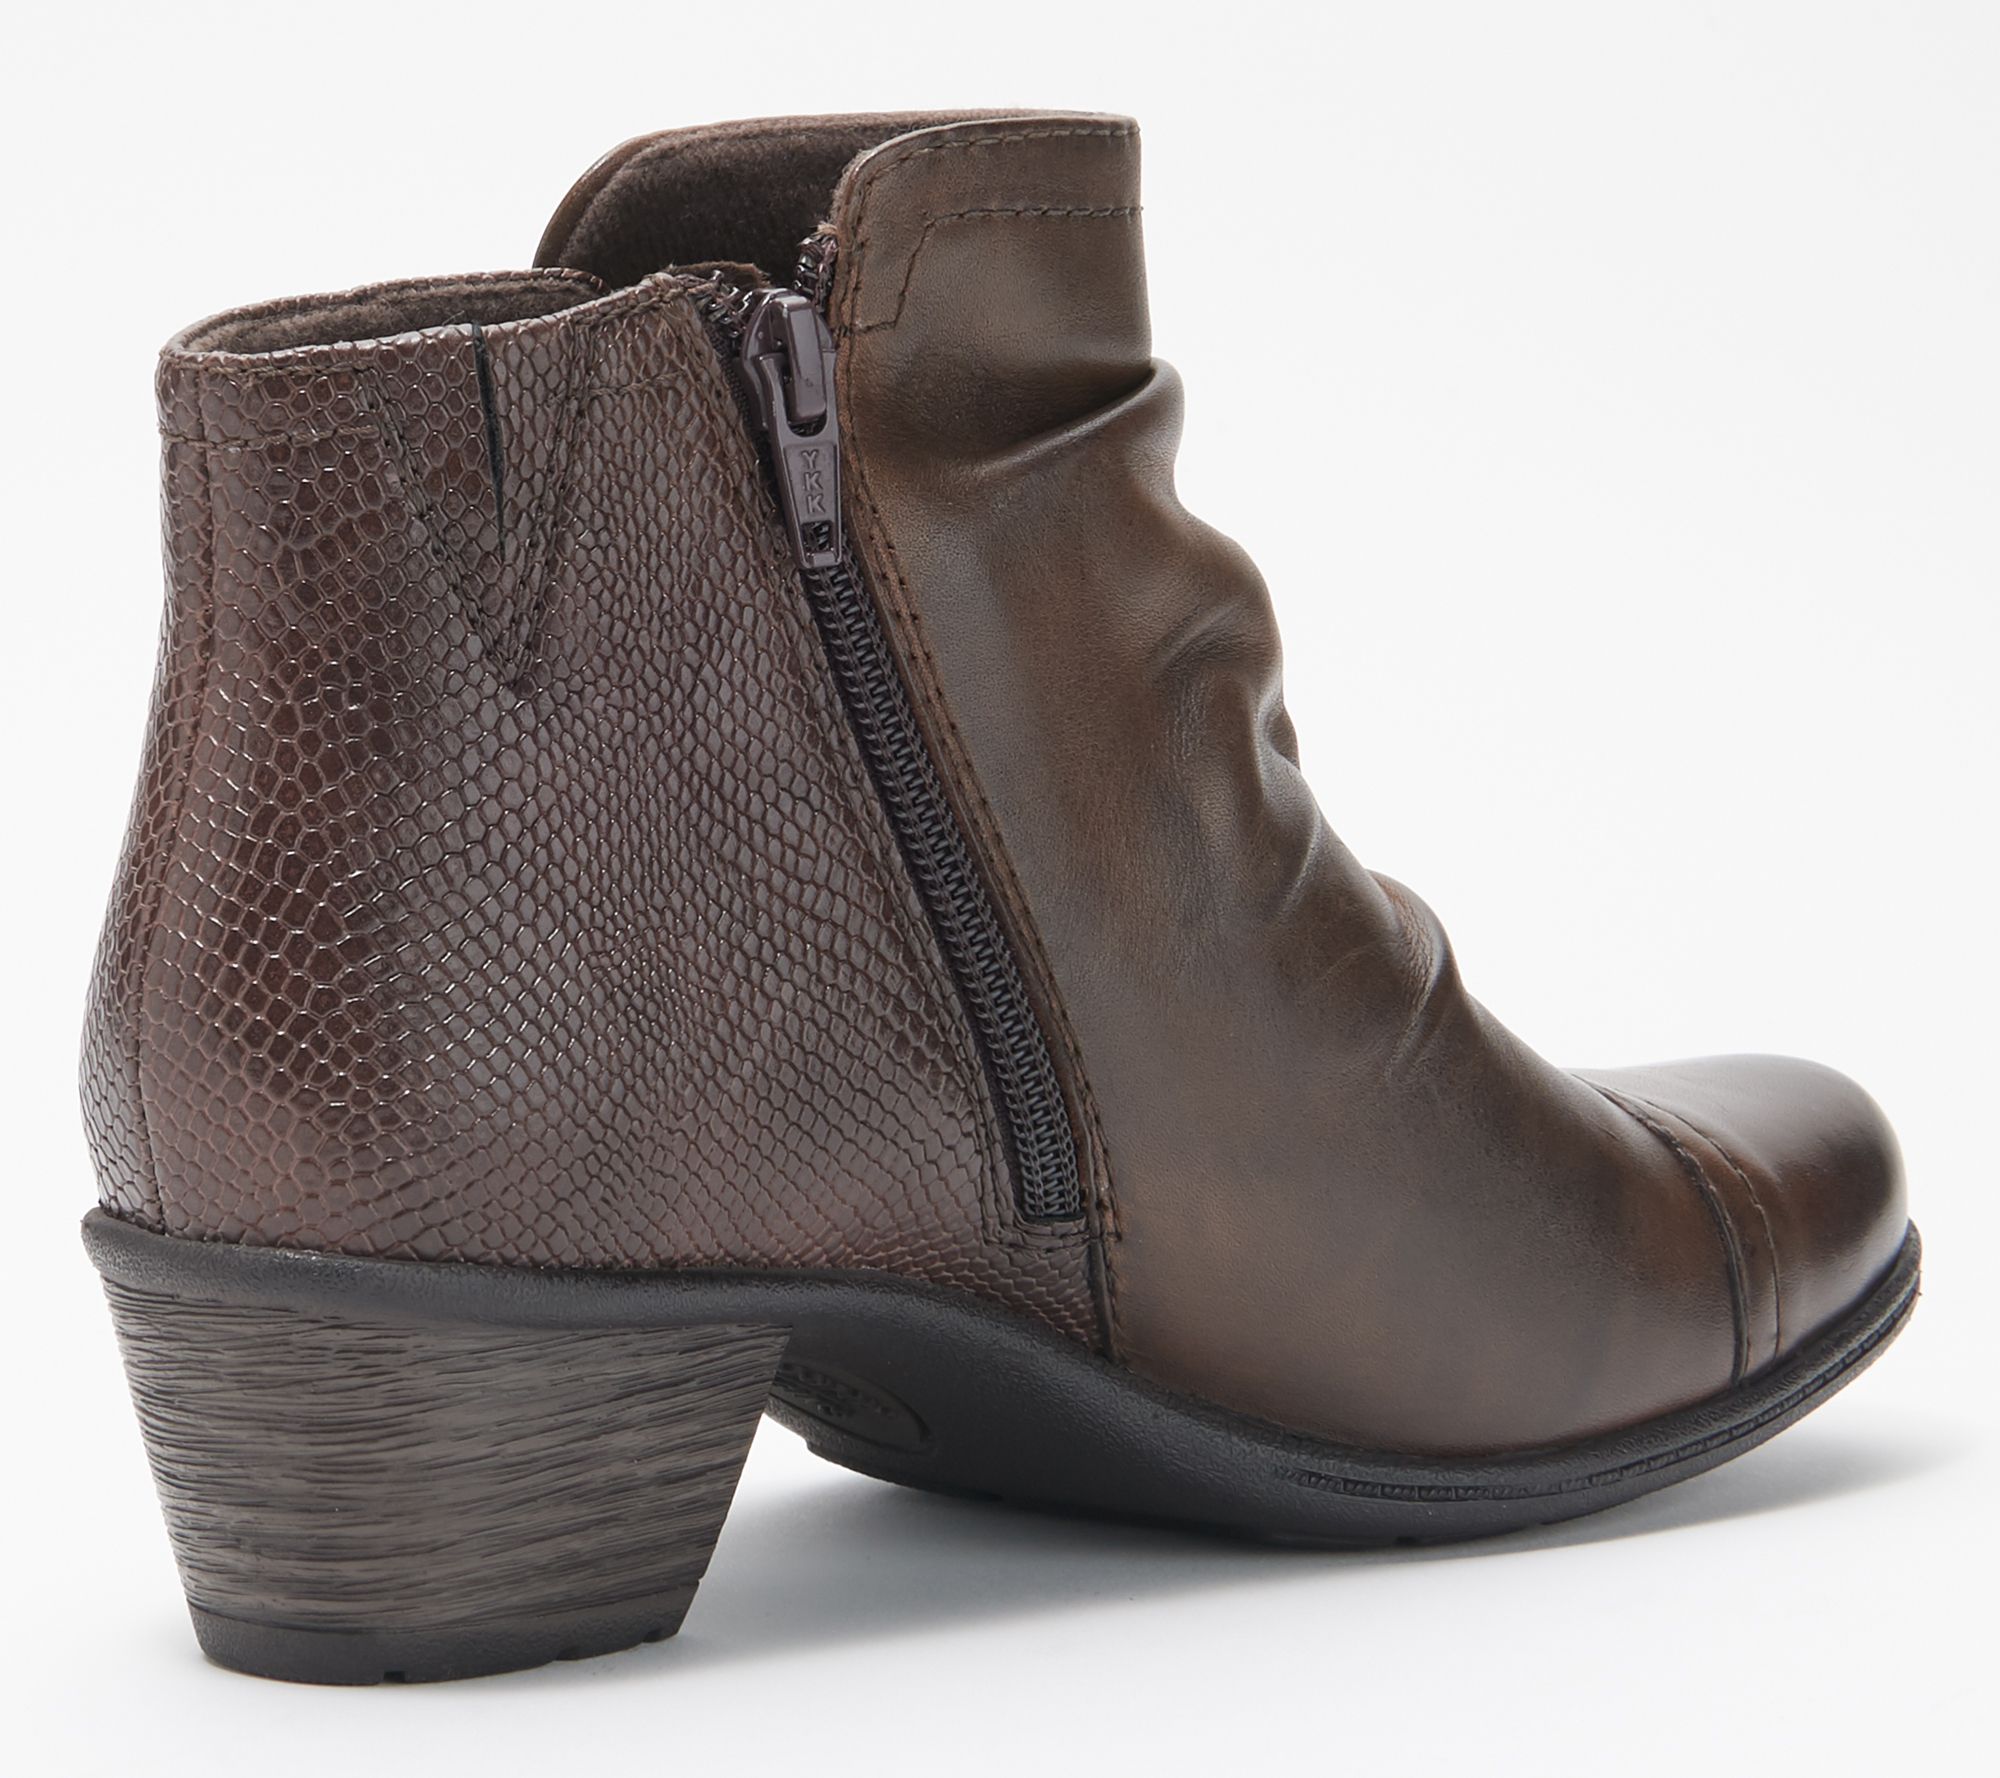 Earth Origins Leather Ankle Boots - Marietta Malcolm - QVC.com